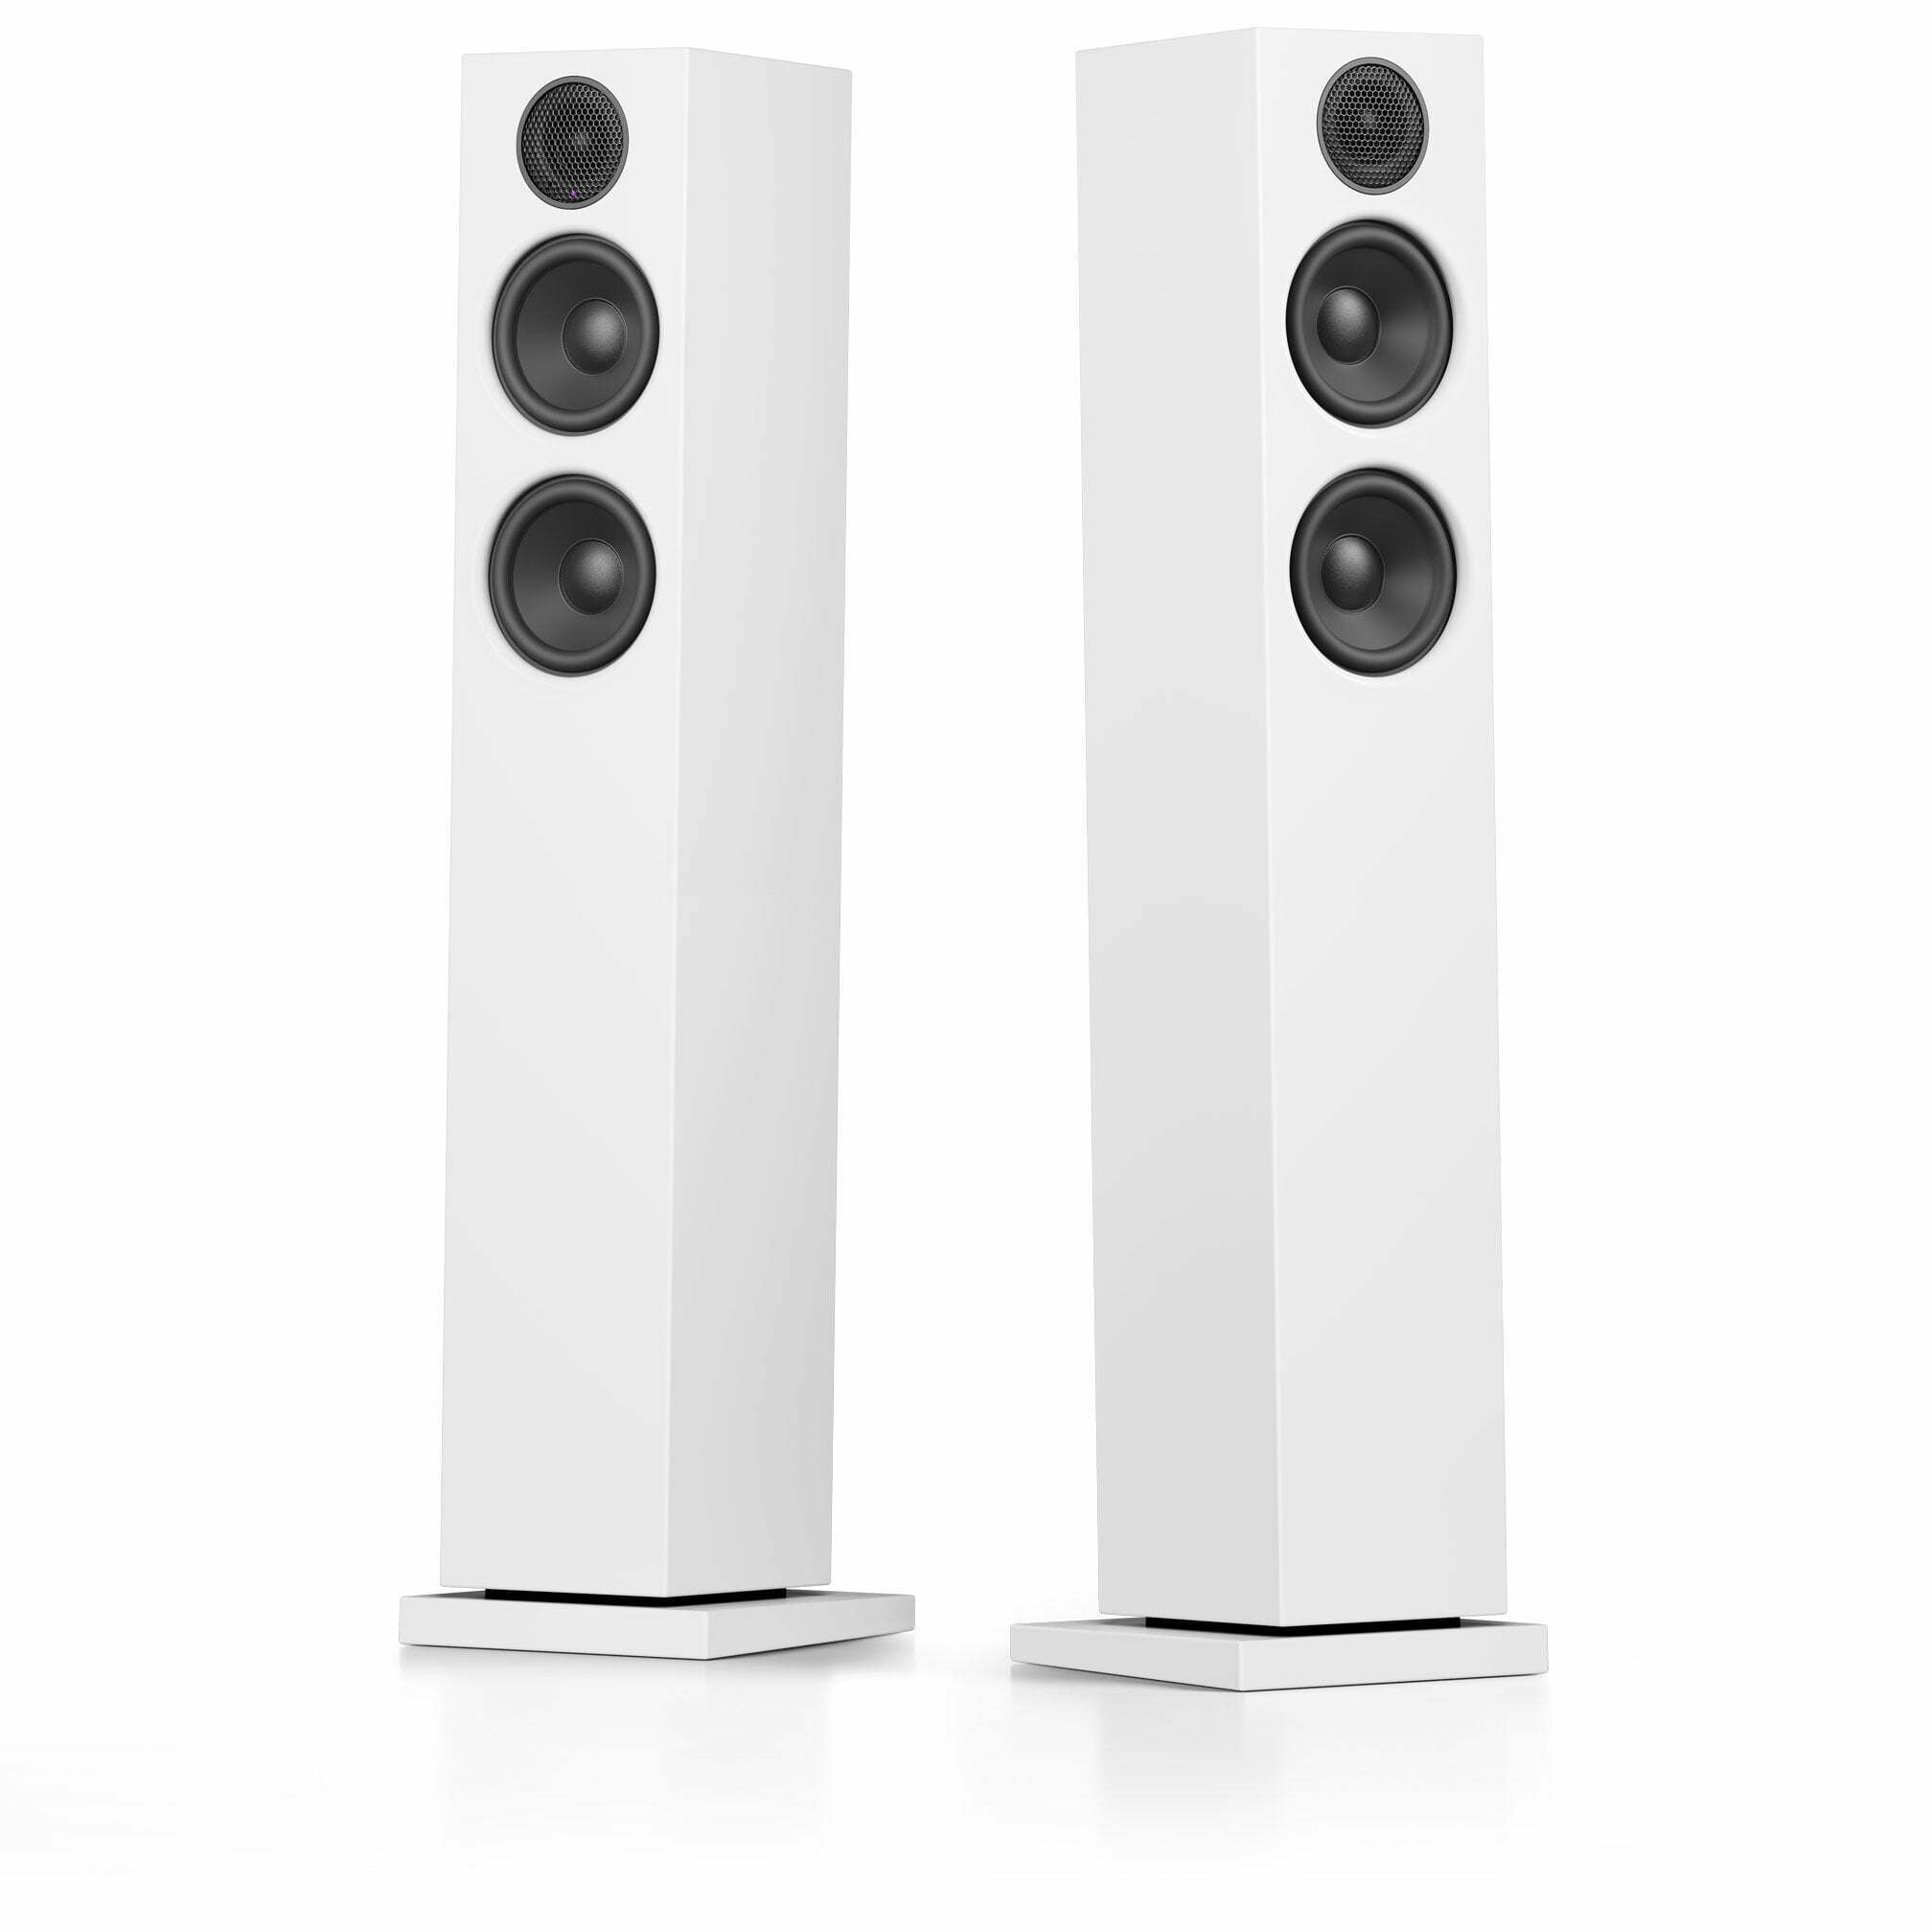 wireless-multiroom-speaker-A36-white-angle1-nofront-AudioPro|wireless-multiroom-speaker-A36-black-angle1-nofront-AudioPro|audio-pro-addon-t20-white-high-quality-speaker-powered-wireless-floorstanding-hifi-usb-stereo-bluetooth-wireless